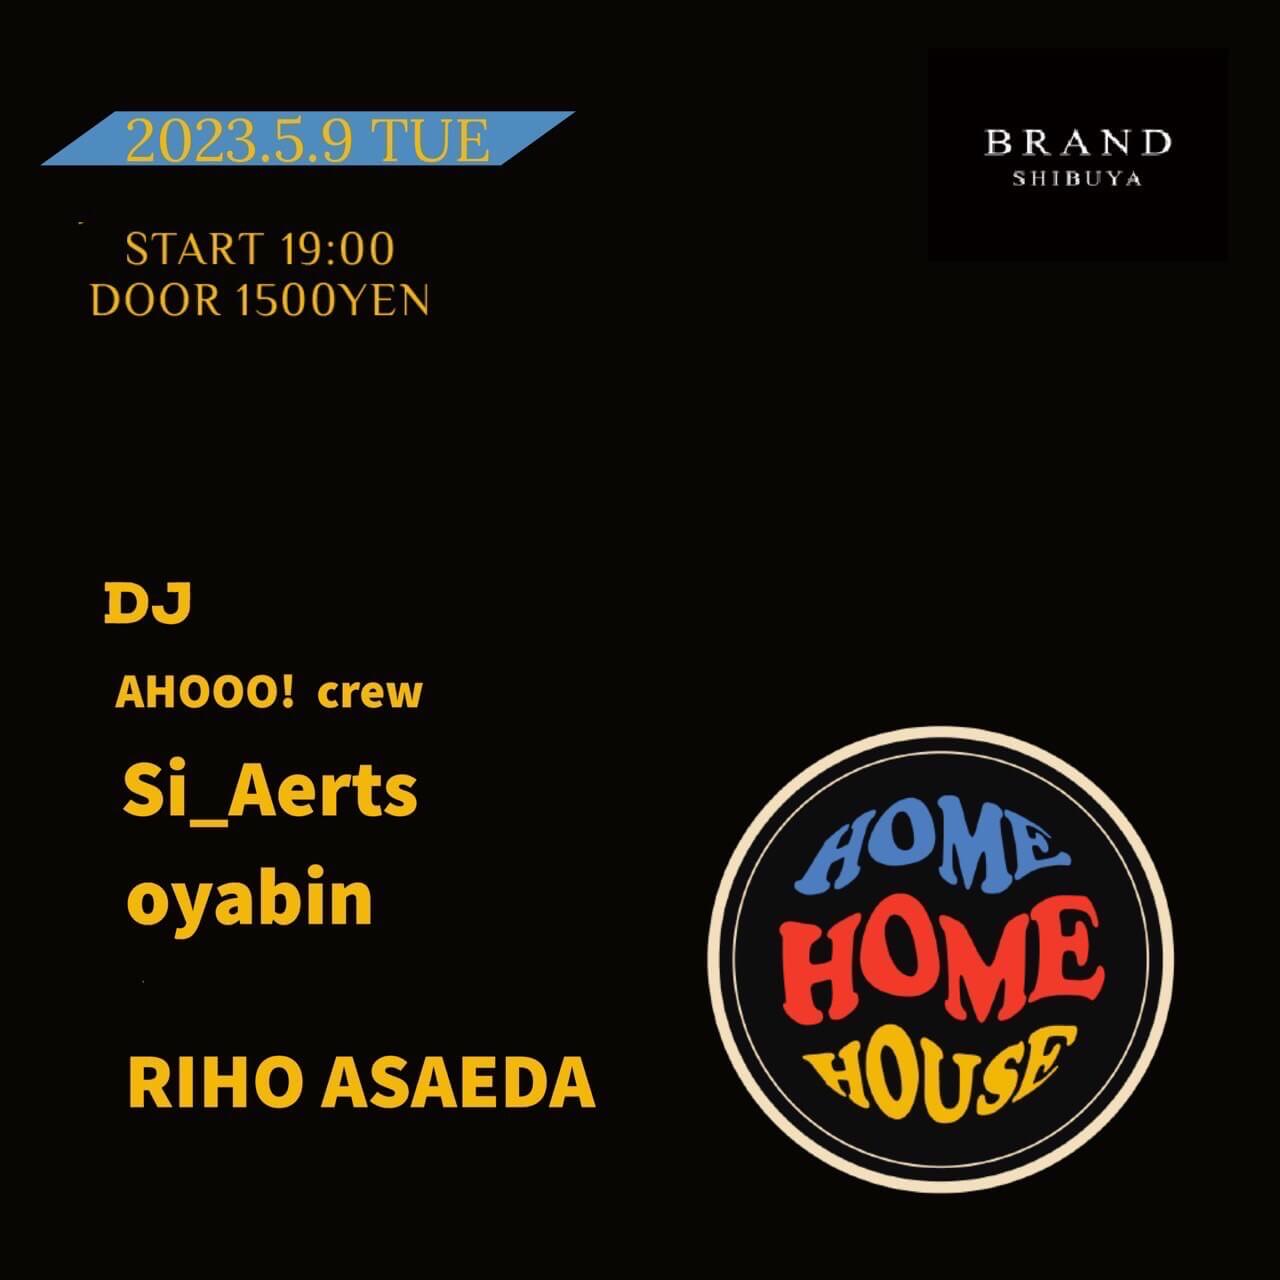 HOME HOME HOUSE 2023年05月09日（火曜日）に渋谷 クラブのBRAND SHIBUYAで開催されるHOUSEイベント